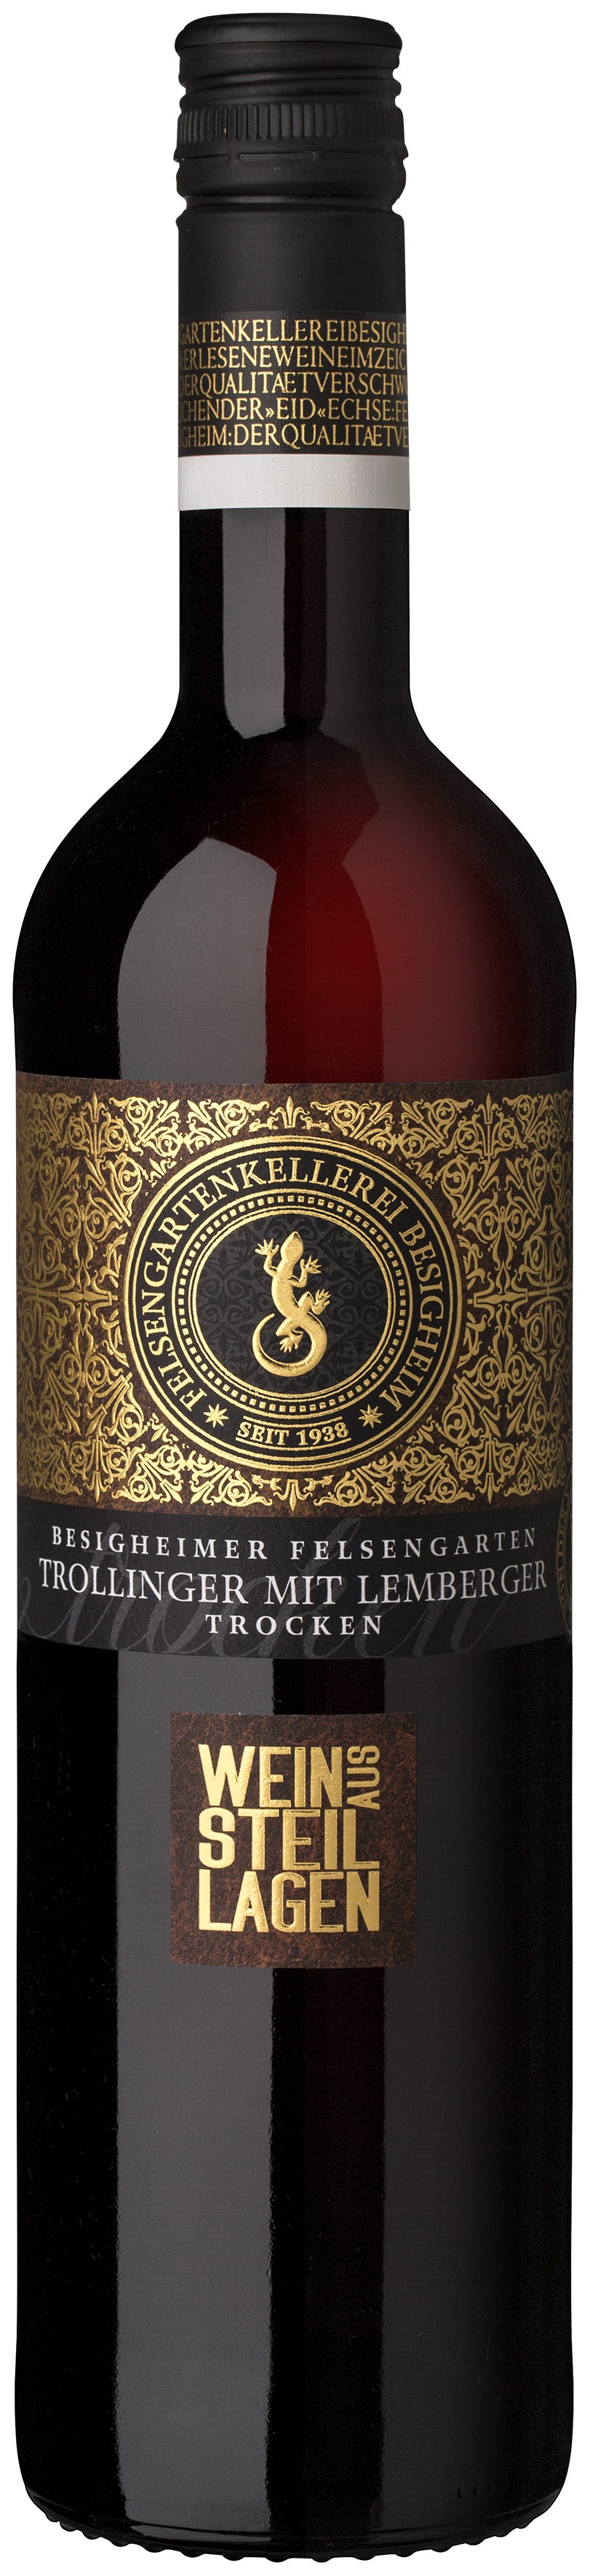 Besigheimer Felsengarten  Steillagen  Trollinger mit Lemberger Qualitätswein - trocken -